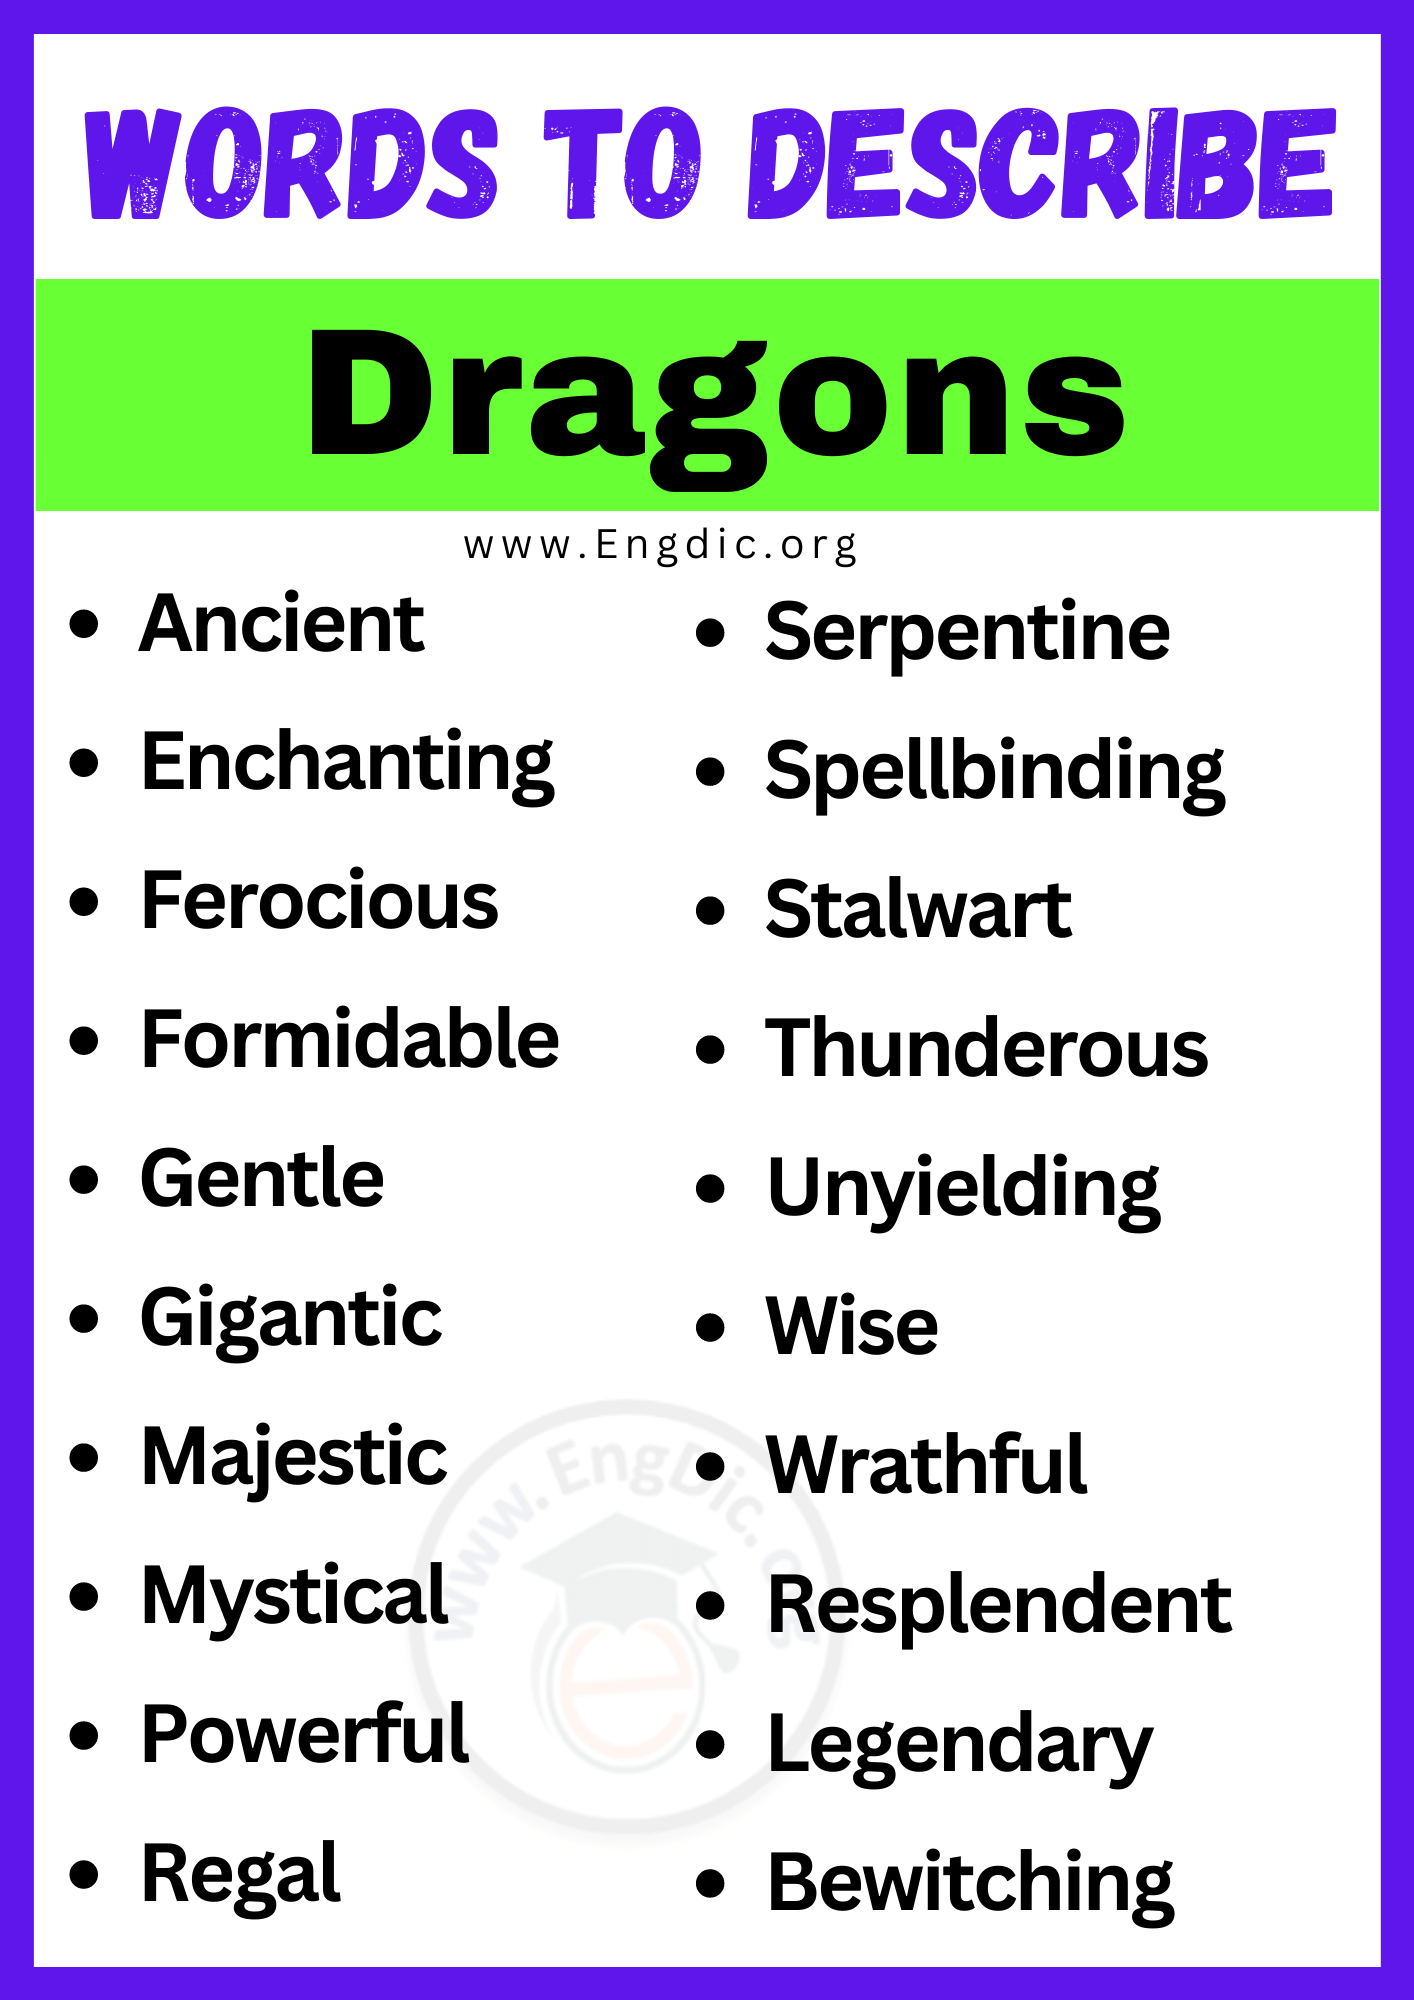 Words to Describe Dragons